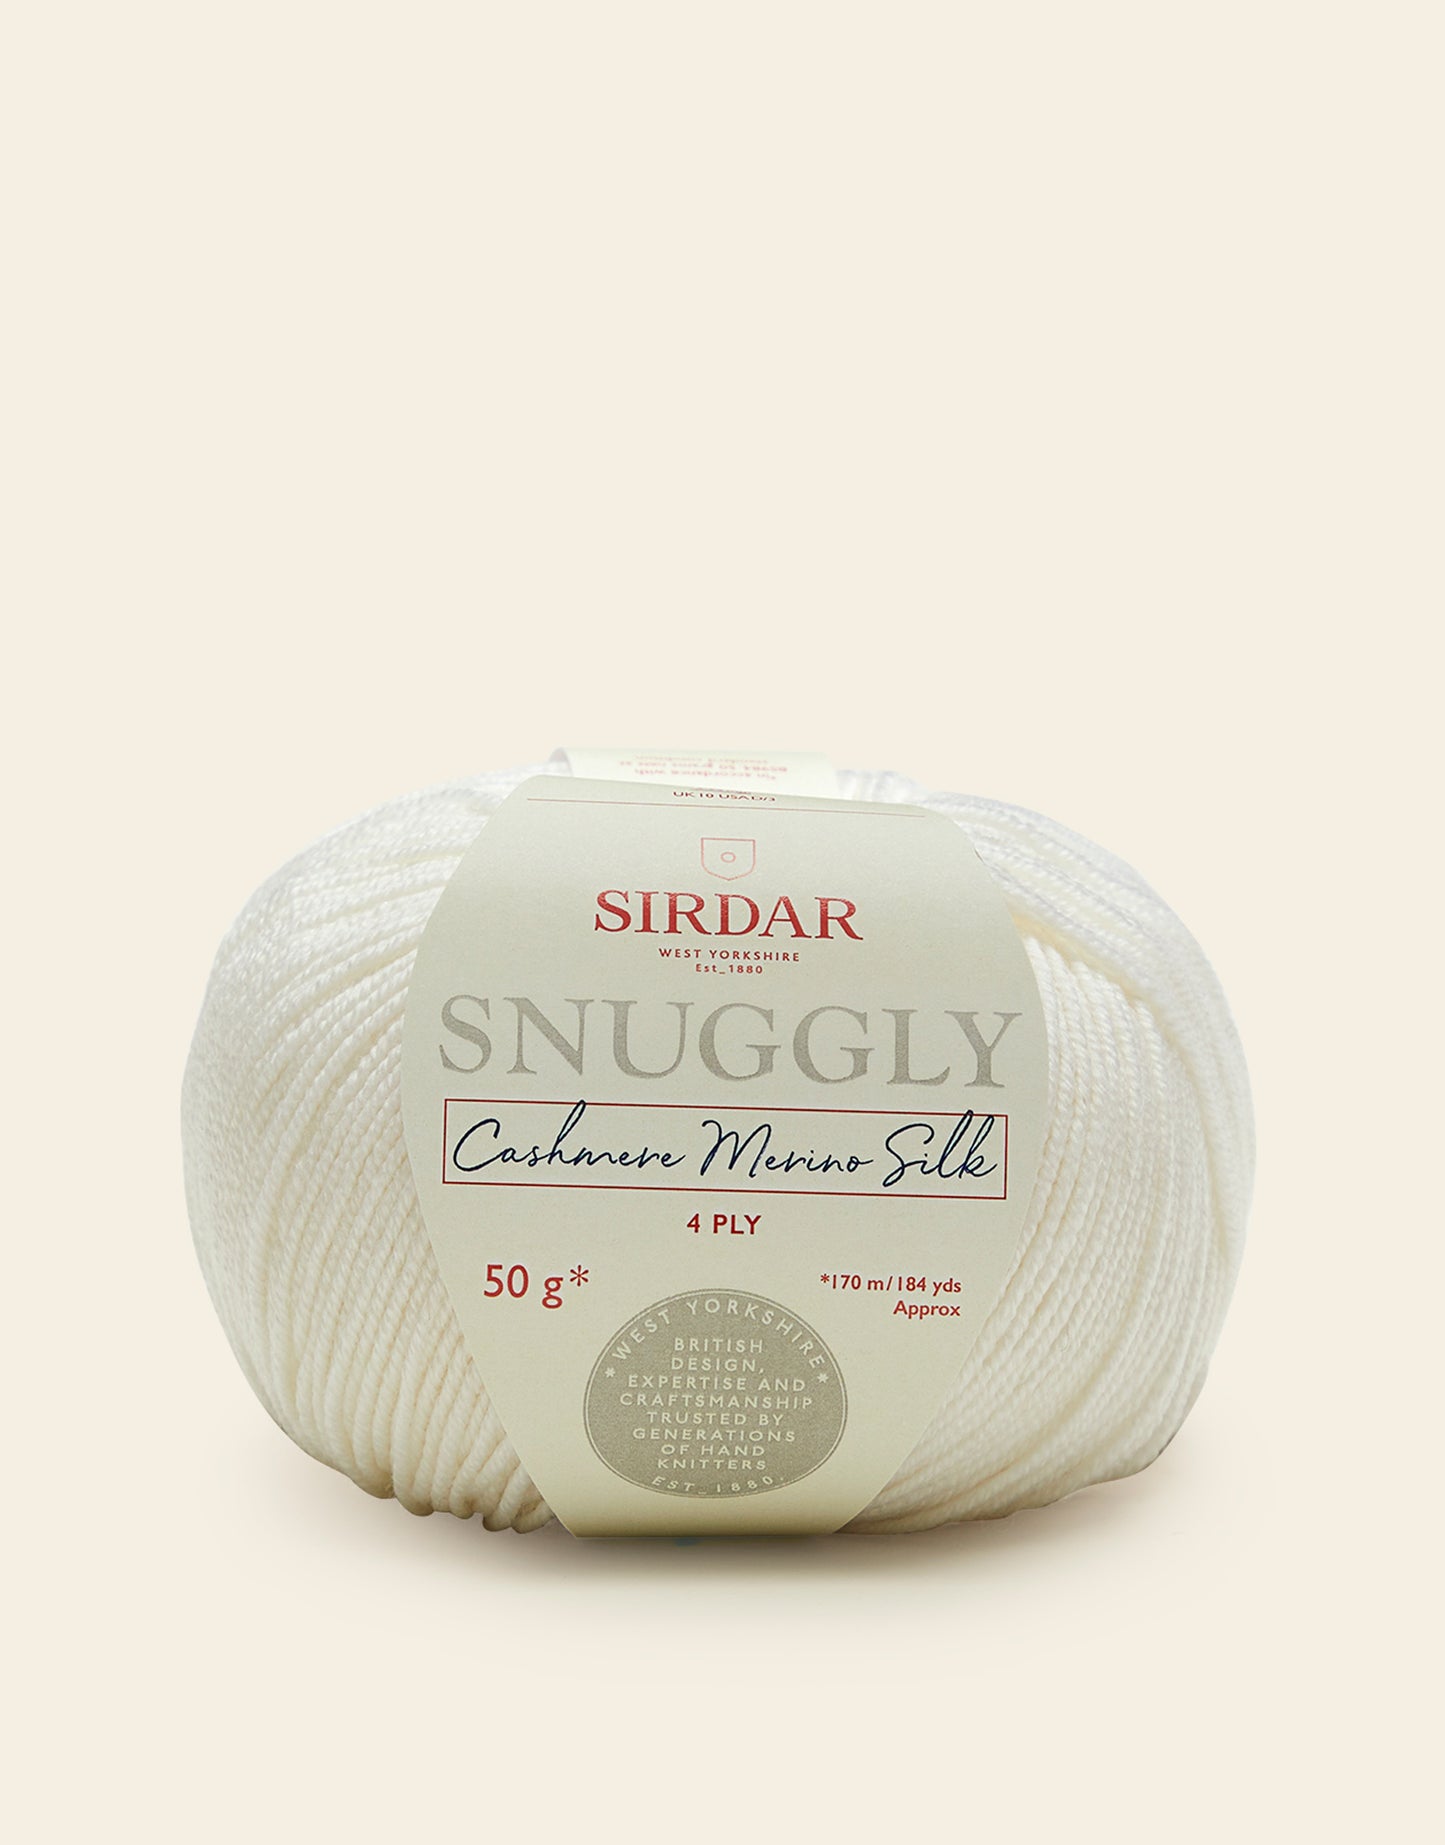 Sirdar Snuggly Baby Cashmere Merino Silk 4 ply